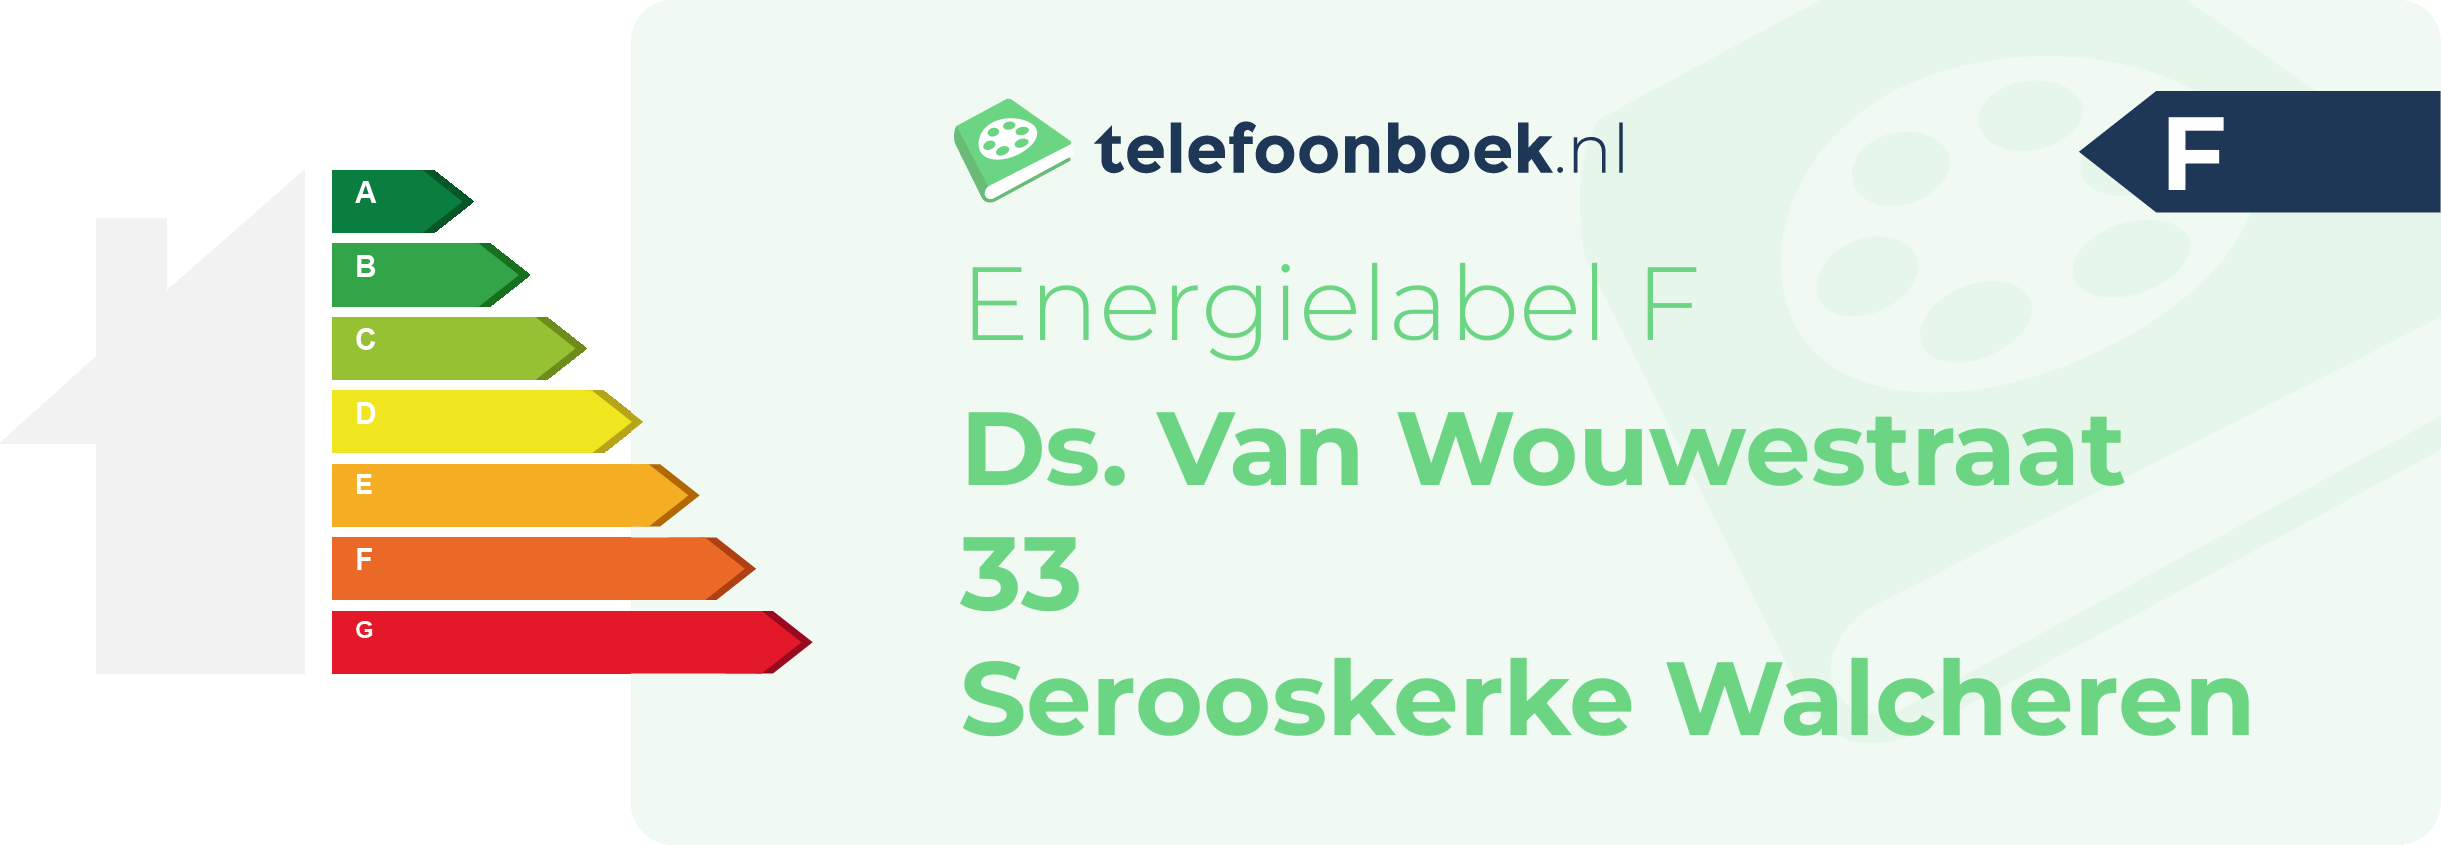 Energielabel Ds. Van Wouwestraat 33 Serooskerke Walcheren